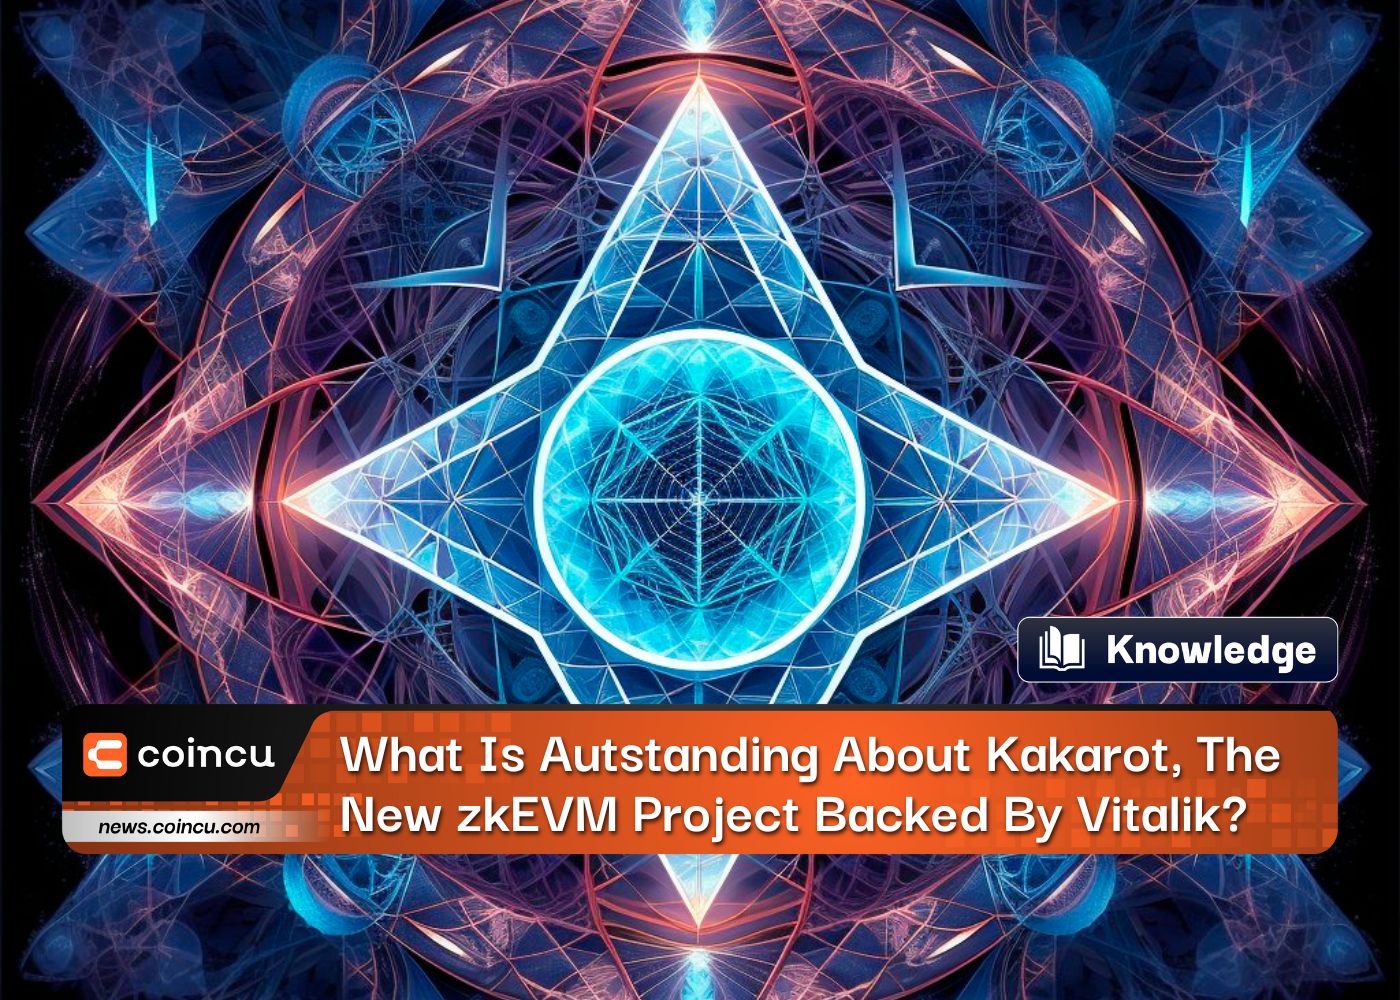 Vitalik이 지원하는 새로운 zkEVM 프로젝트인 Kakarot에 대해 Autstanding은 무엇입니까?